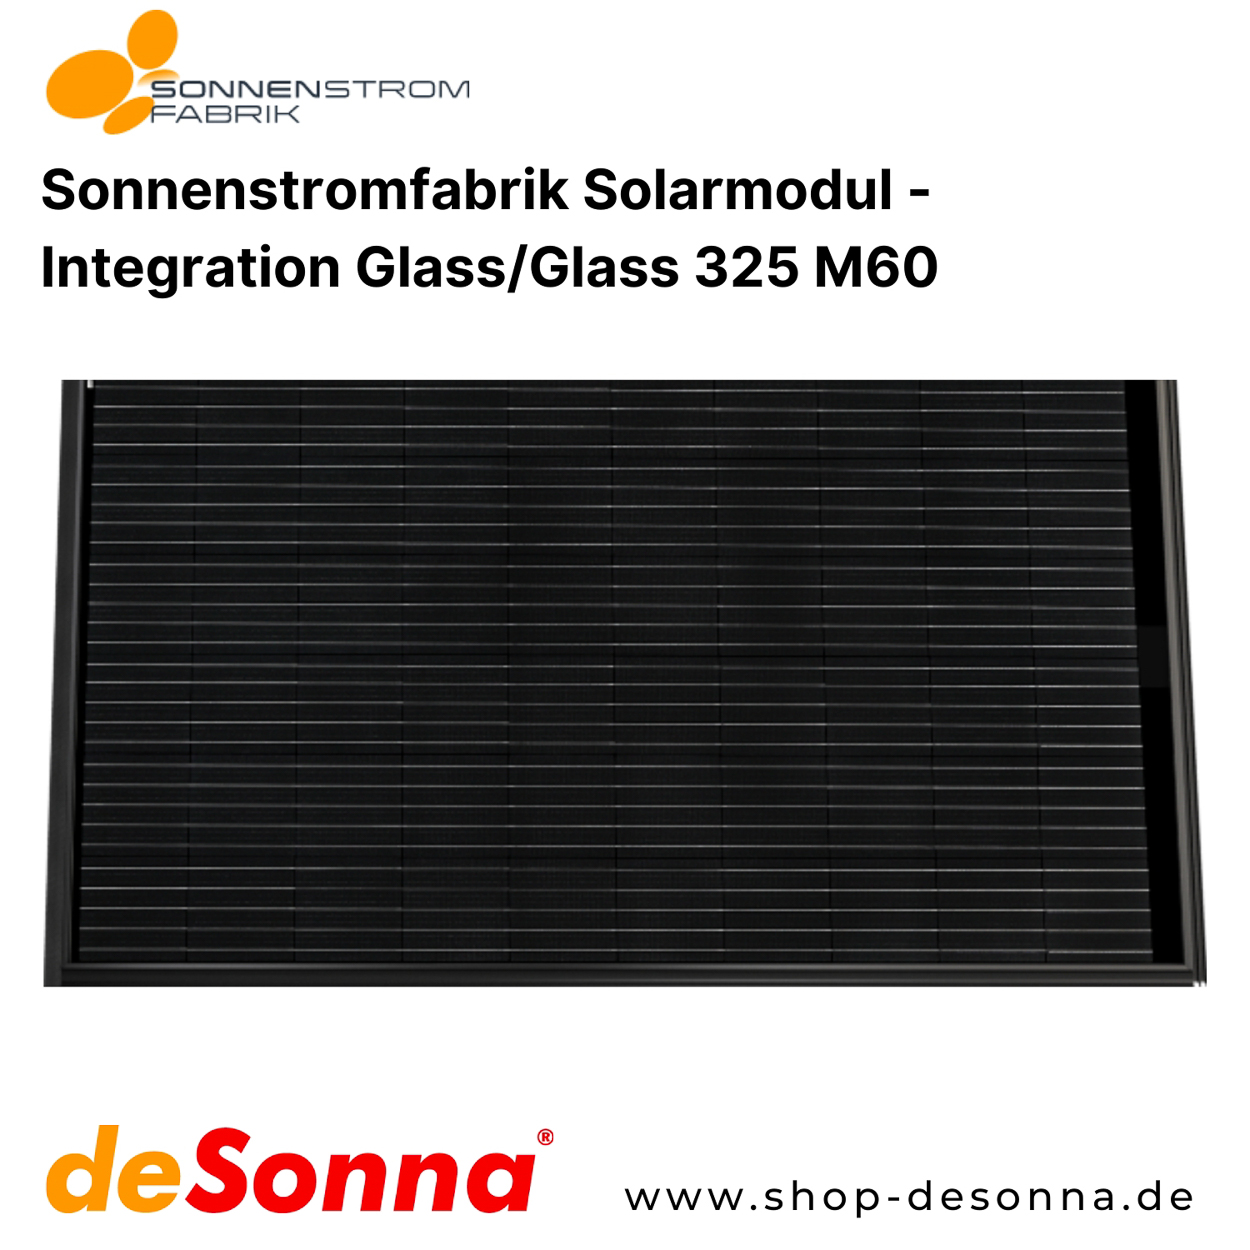 Sonnenstromfabrik Solarmodul - Integration Glass/Glass 325 M60